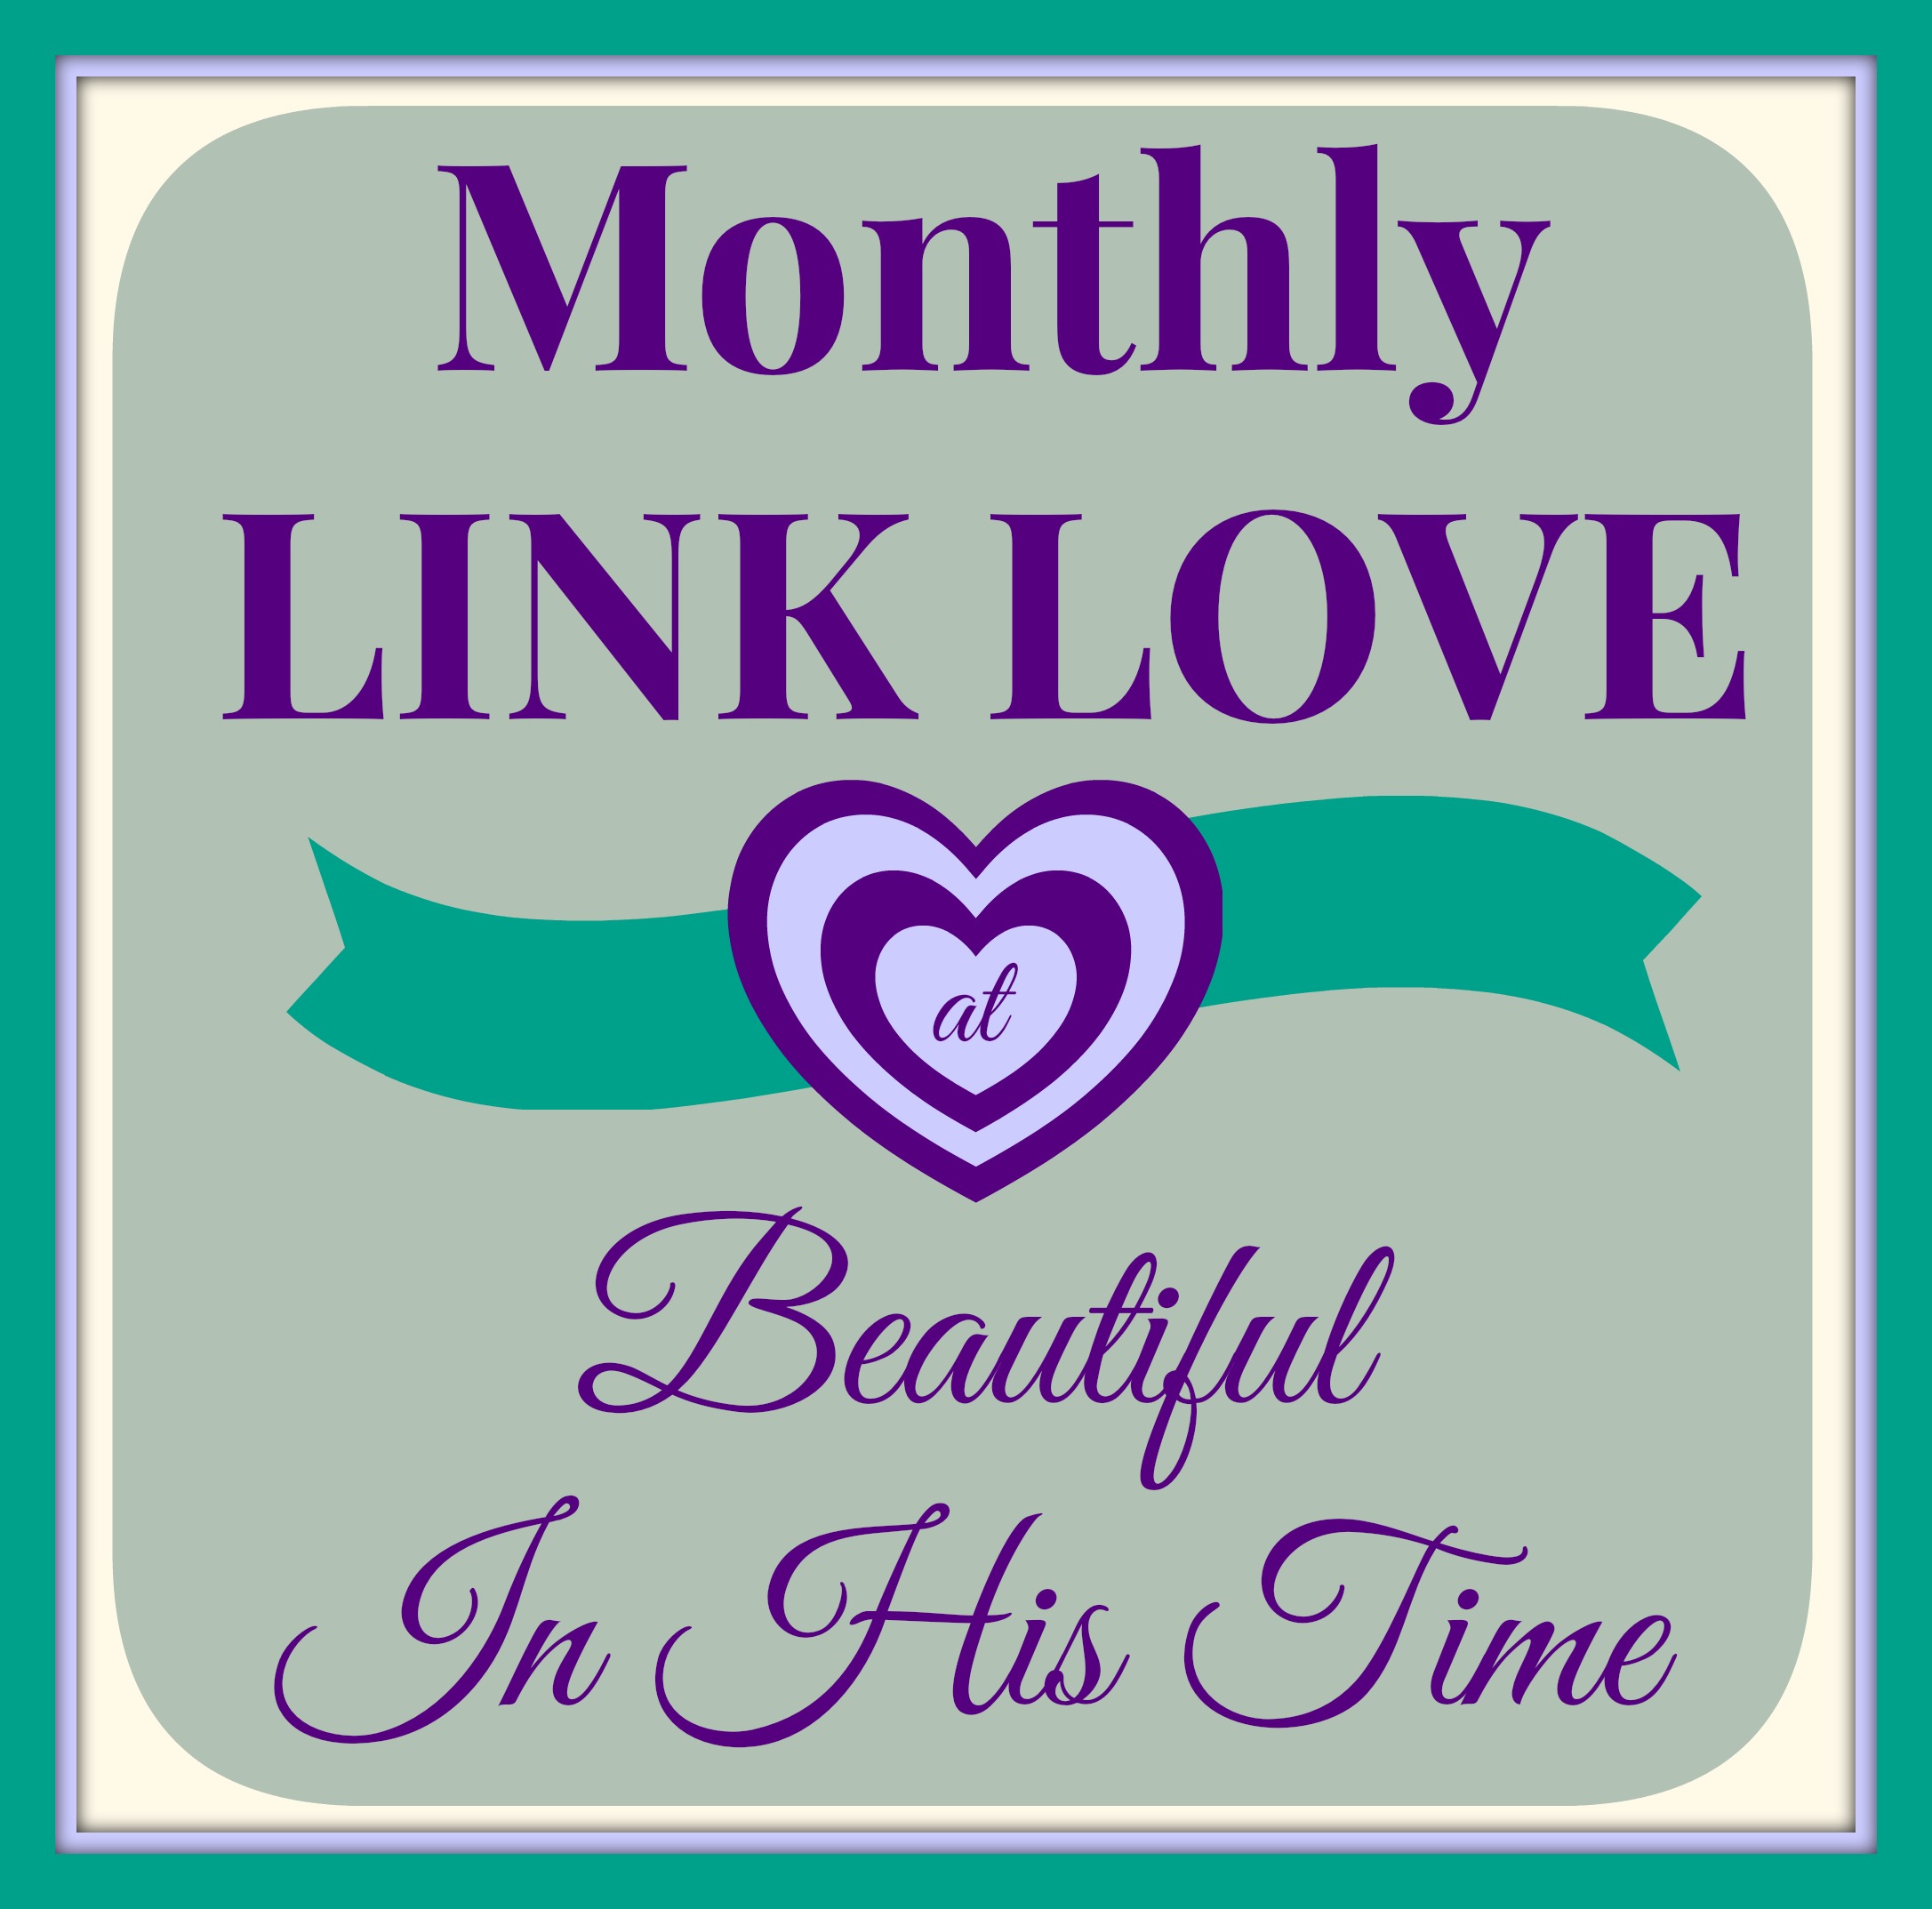 link love